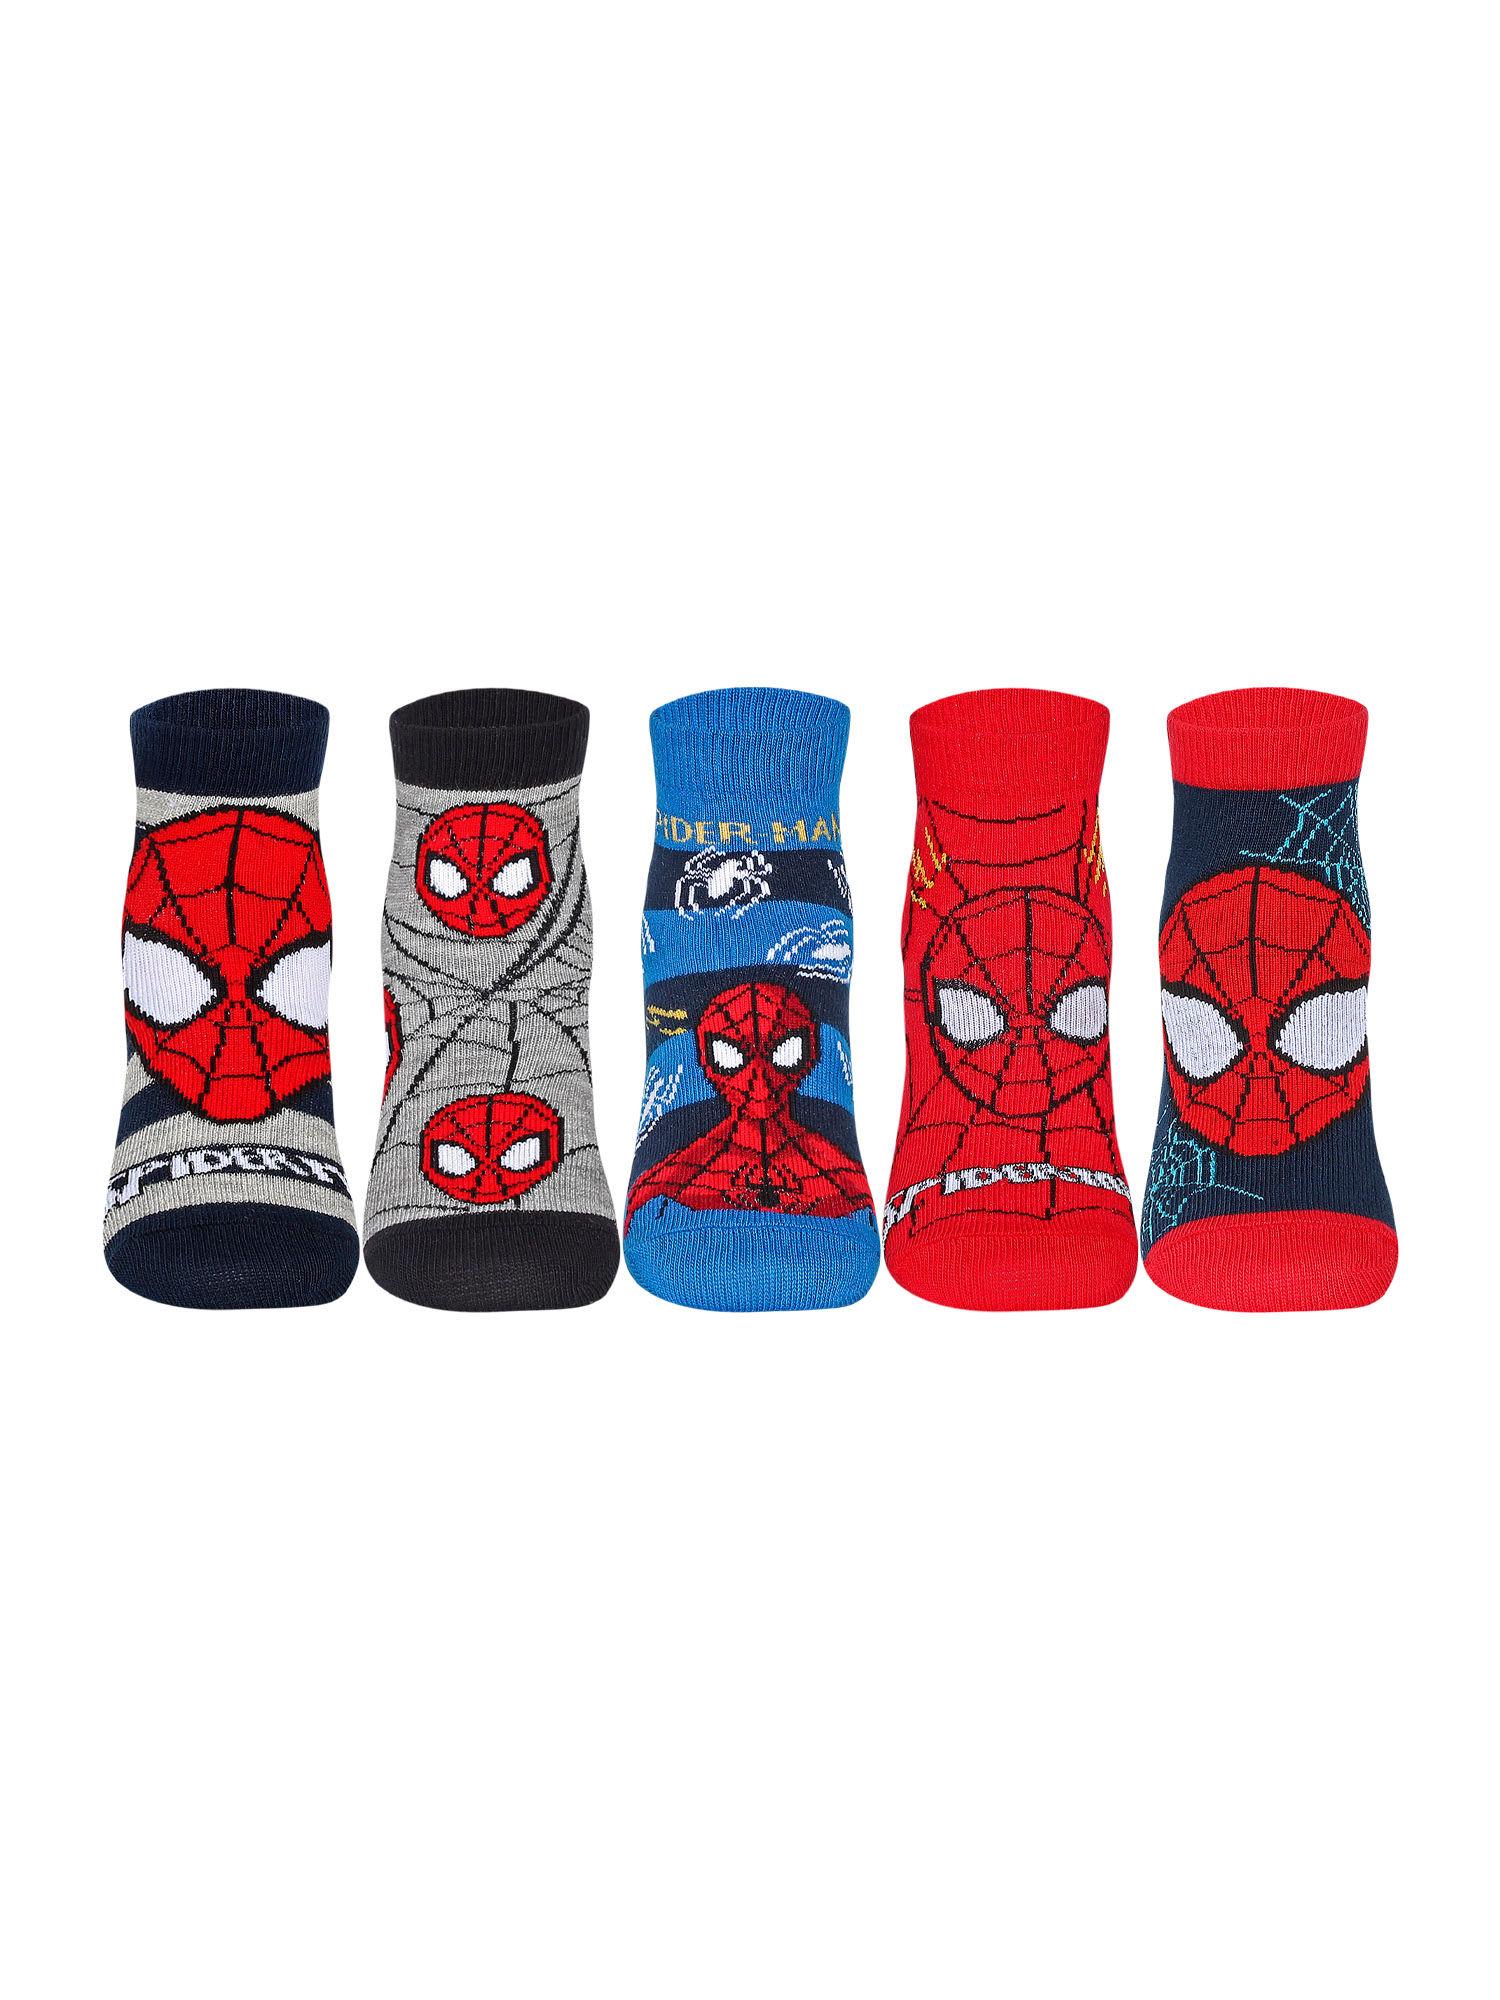 multi-color disney spiderman ankle length socks (pack of 5)